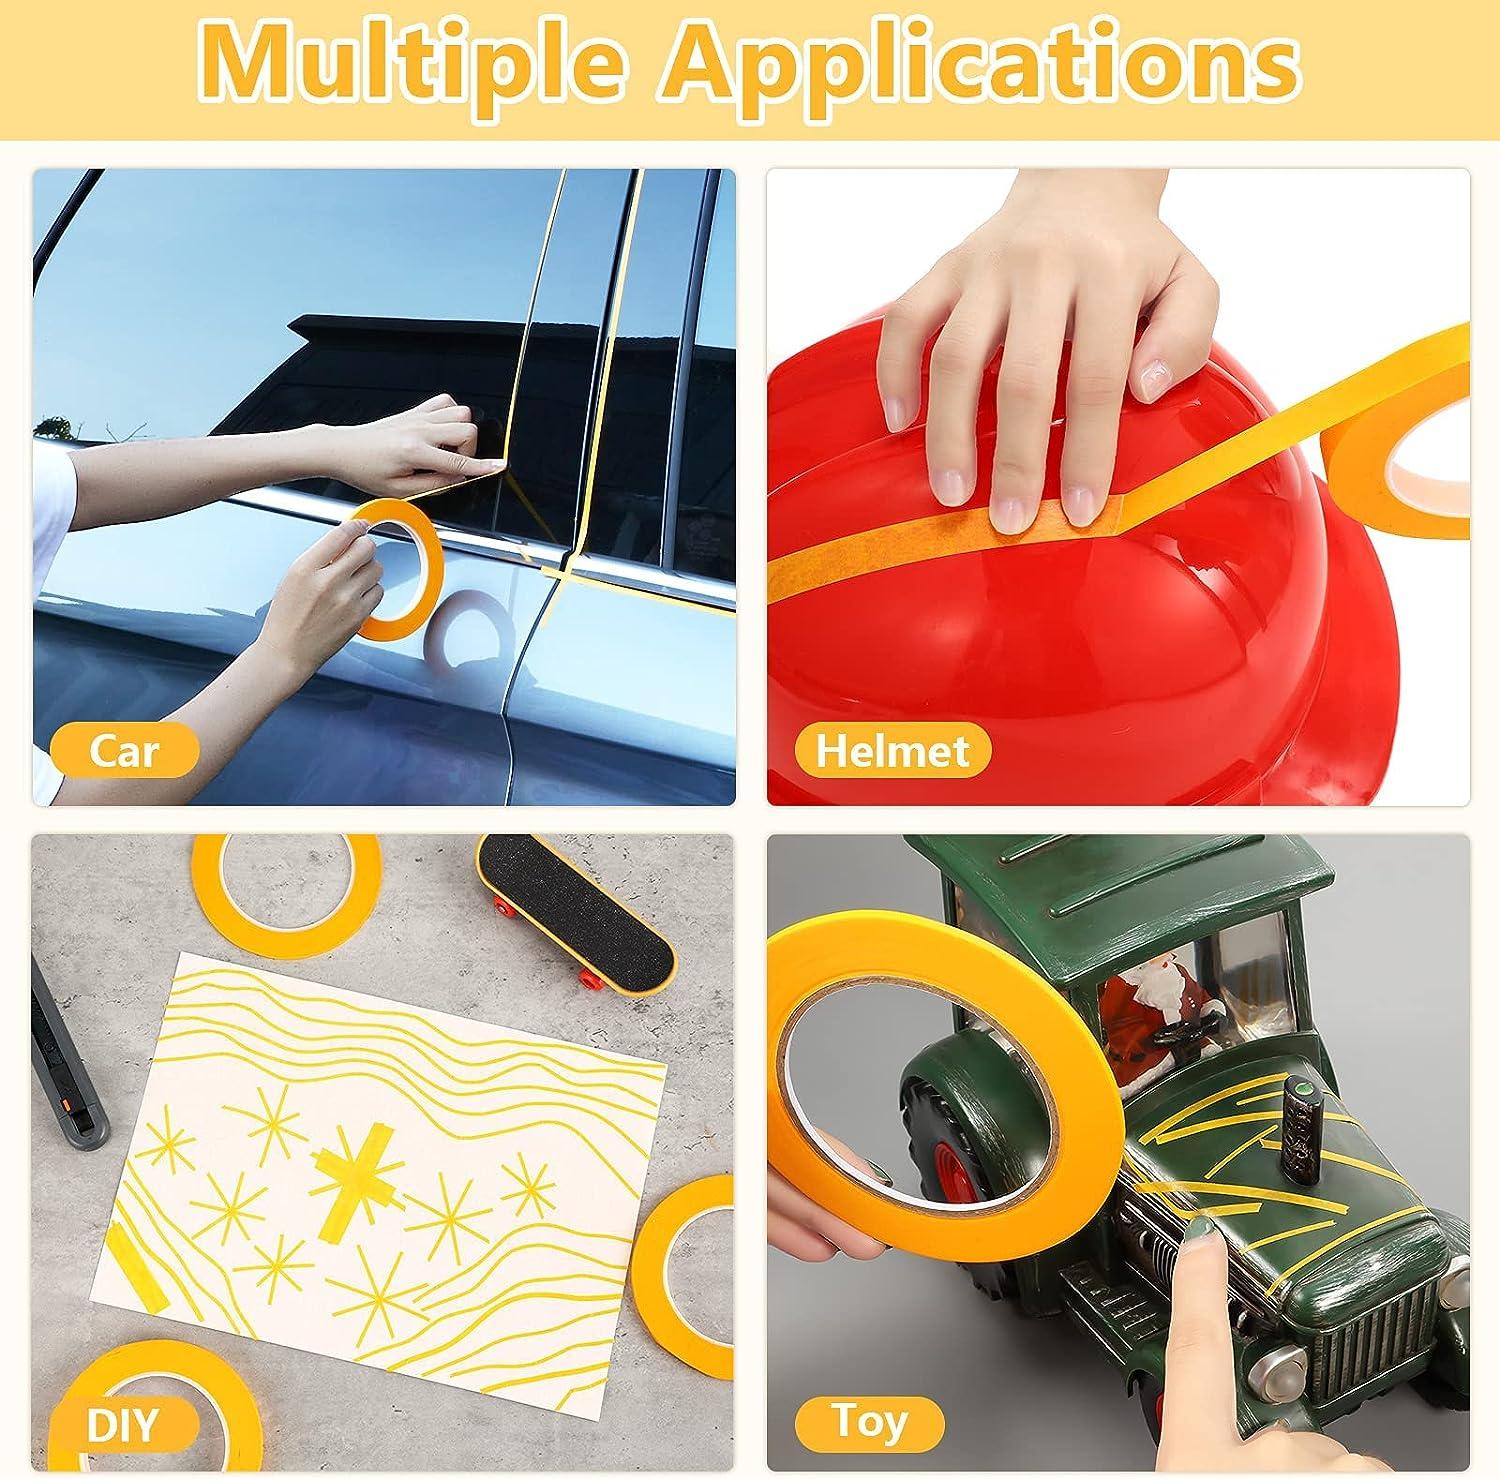 5 Rolls Pinstripe Tape - Masking Tape - Thin Painters Masking Automotive  Tape for DIY, Car, Auto, Paint, Art, Tumblers (Yellow)